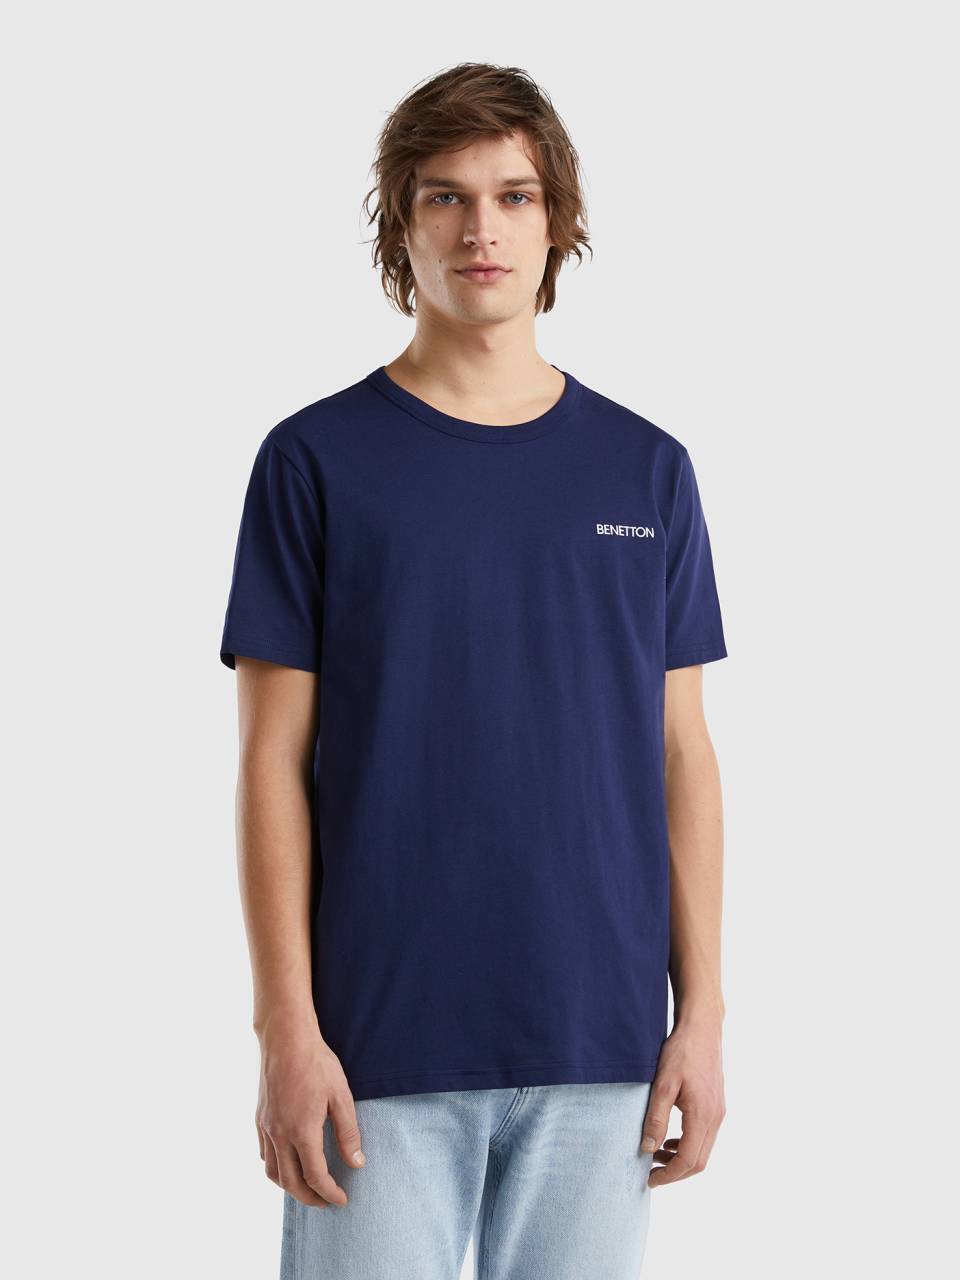 Benetton T-shirt in organic cotton with logo print. 1